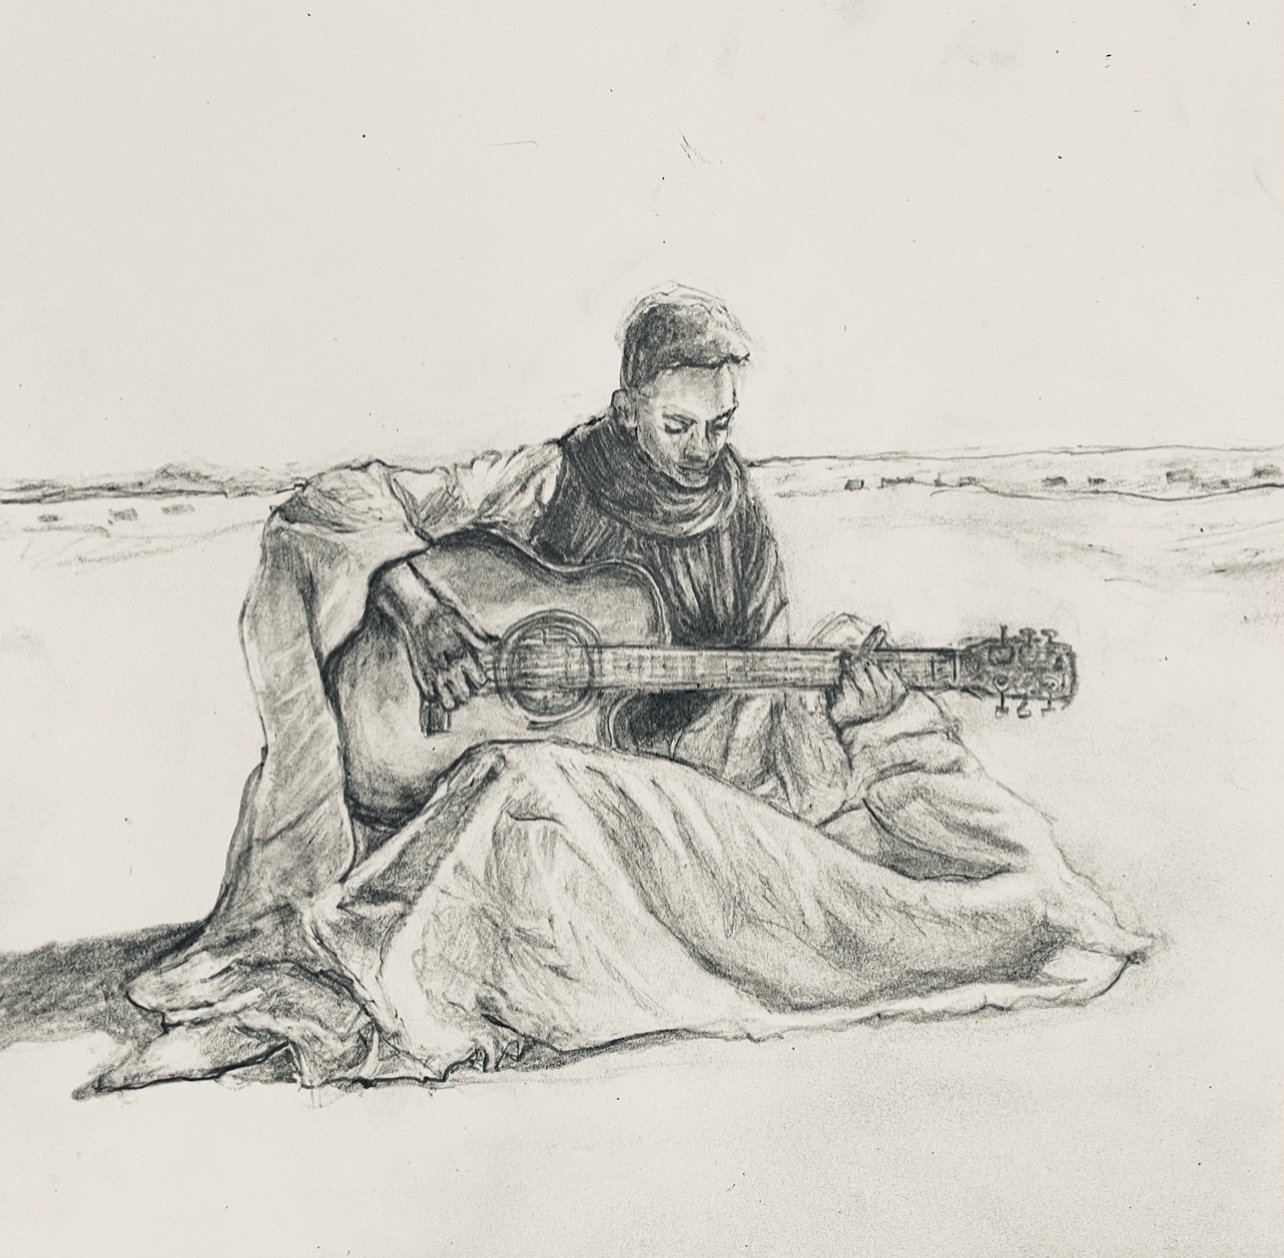  A guitarist in the Sahara